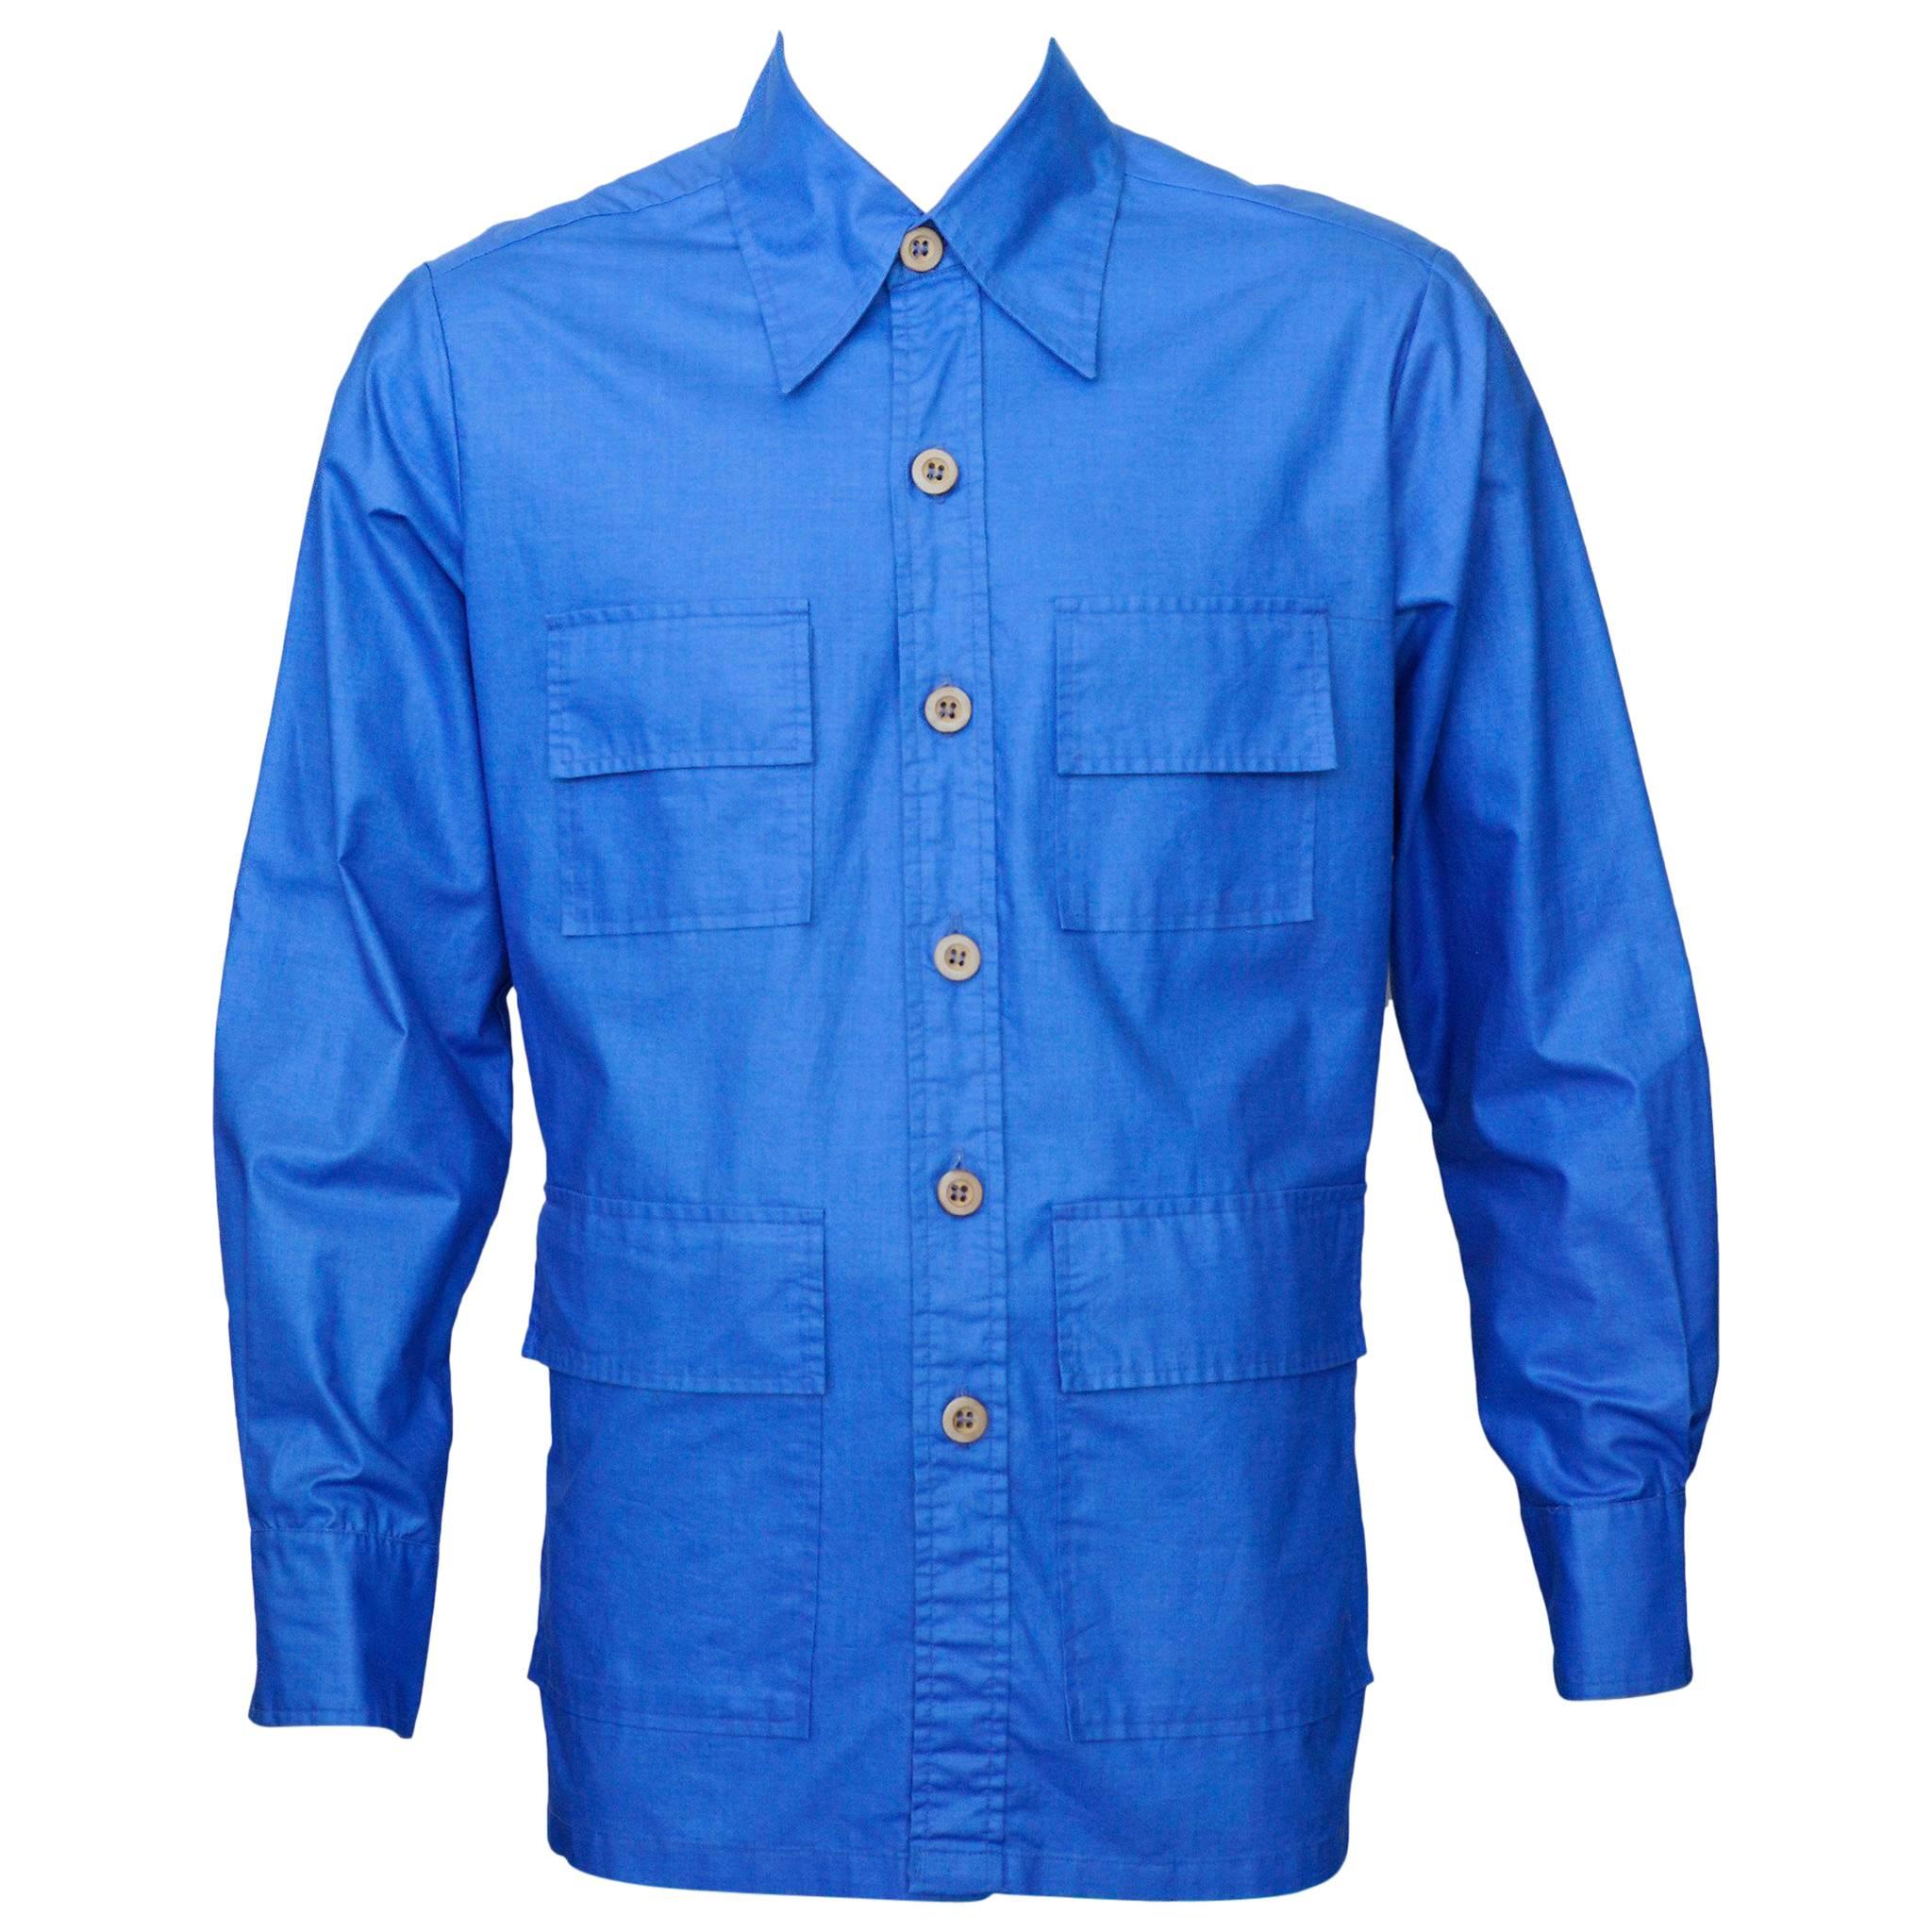 Bill Blass For Bonwit Teller Safari Shirt Jacket